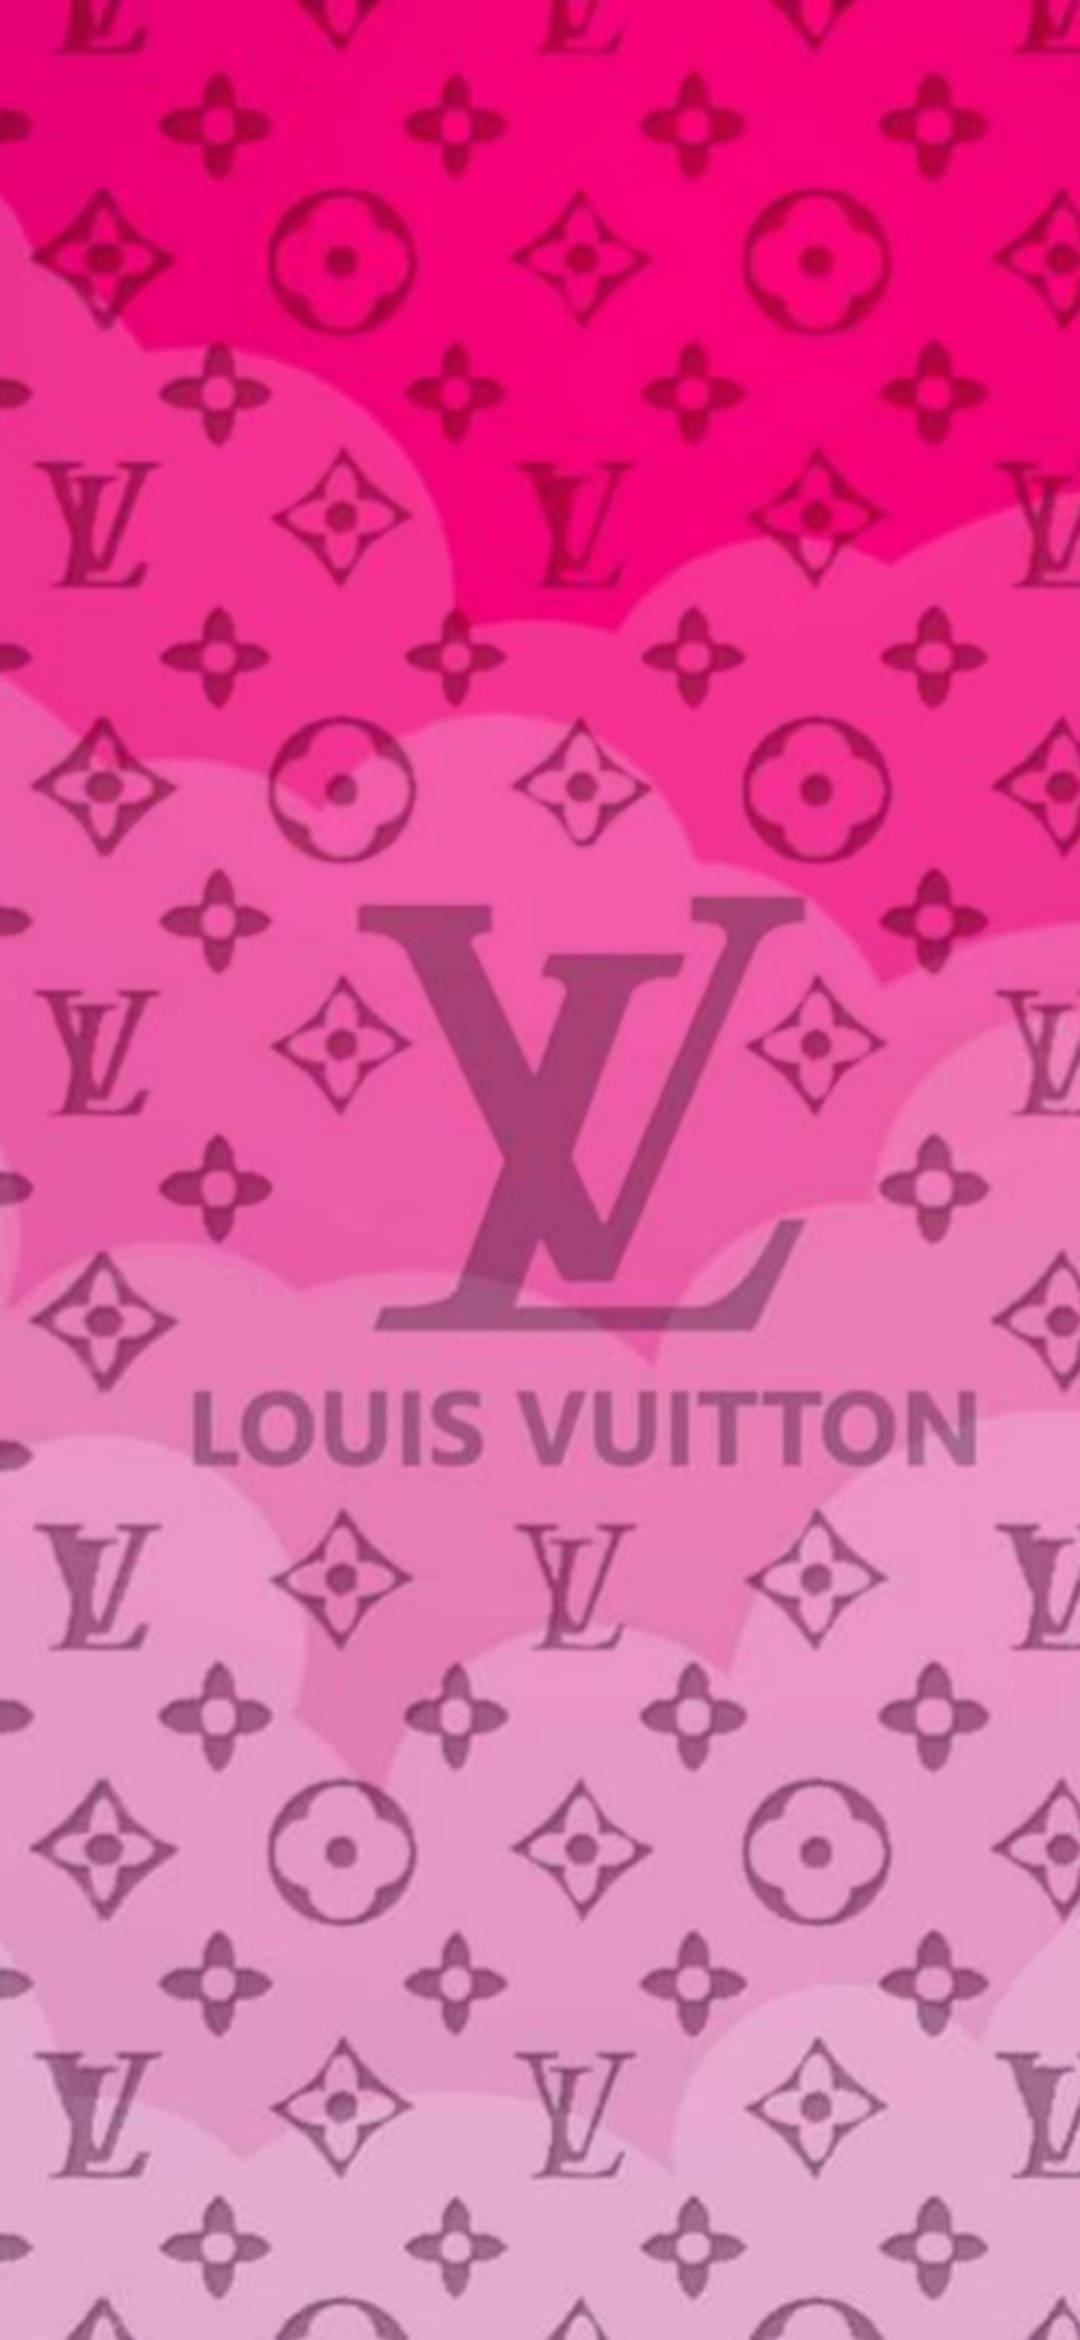 Download Pink Shades Louis Vuitton Phone Wallpaper | Wallpapers.com